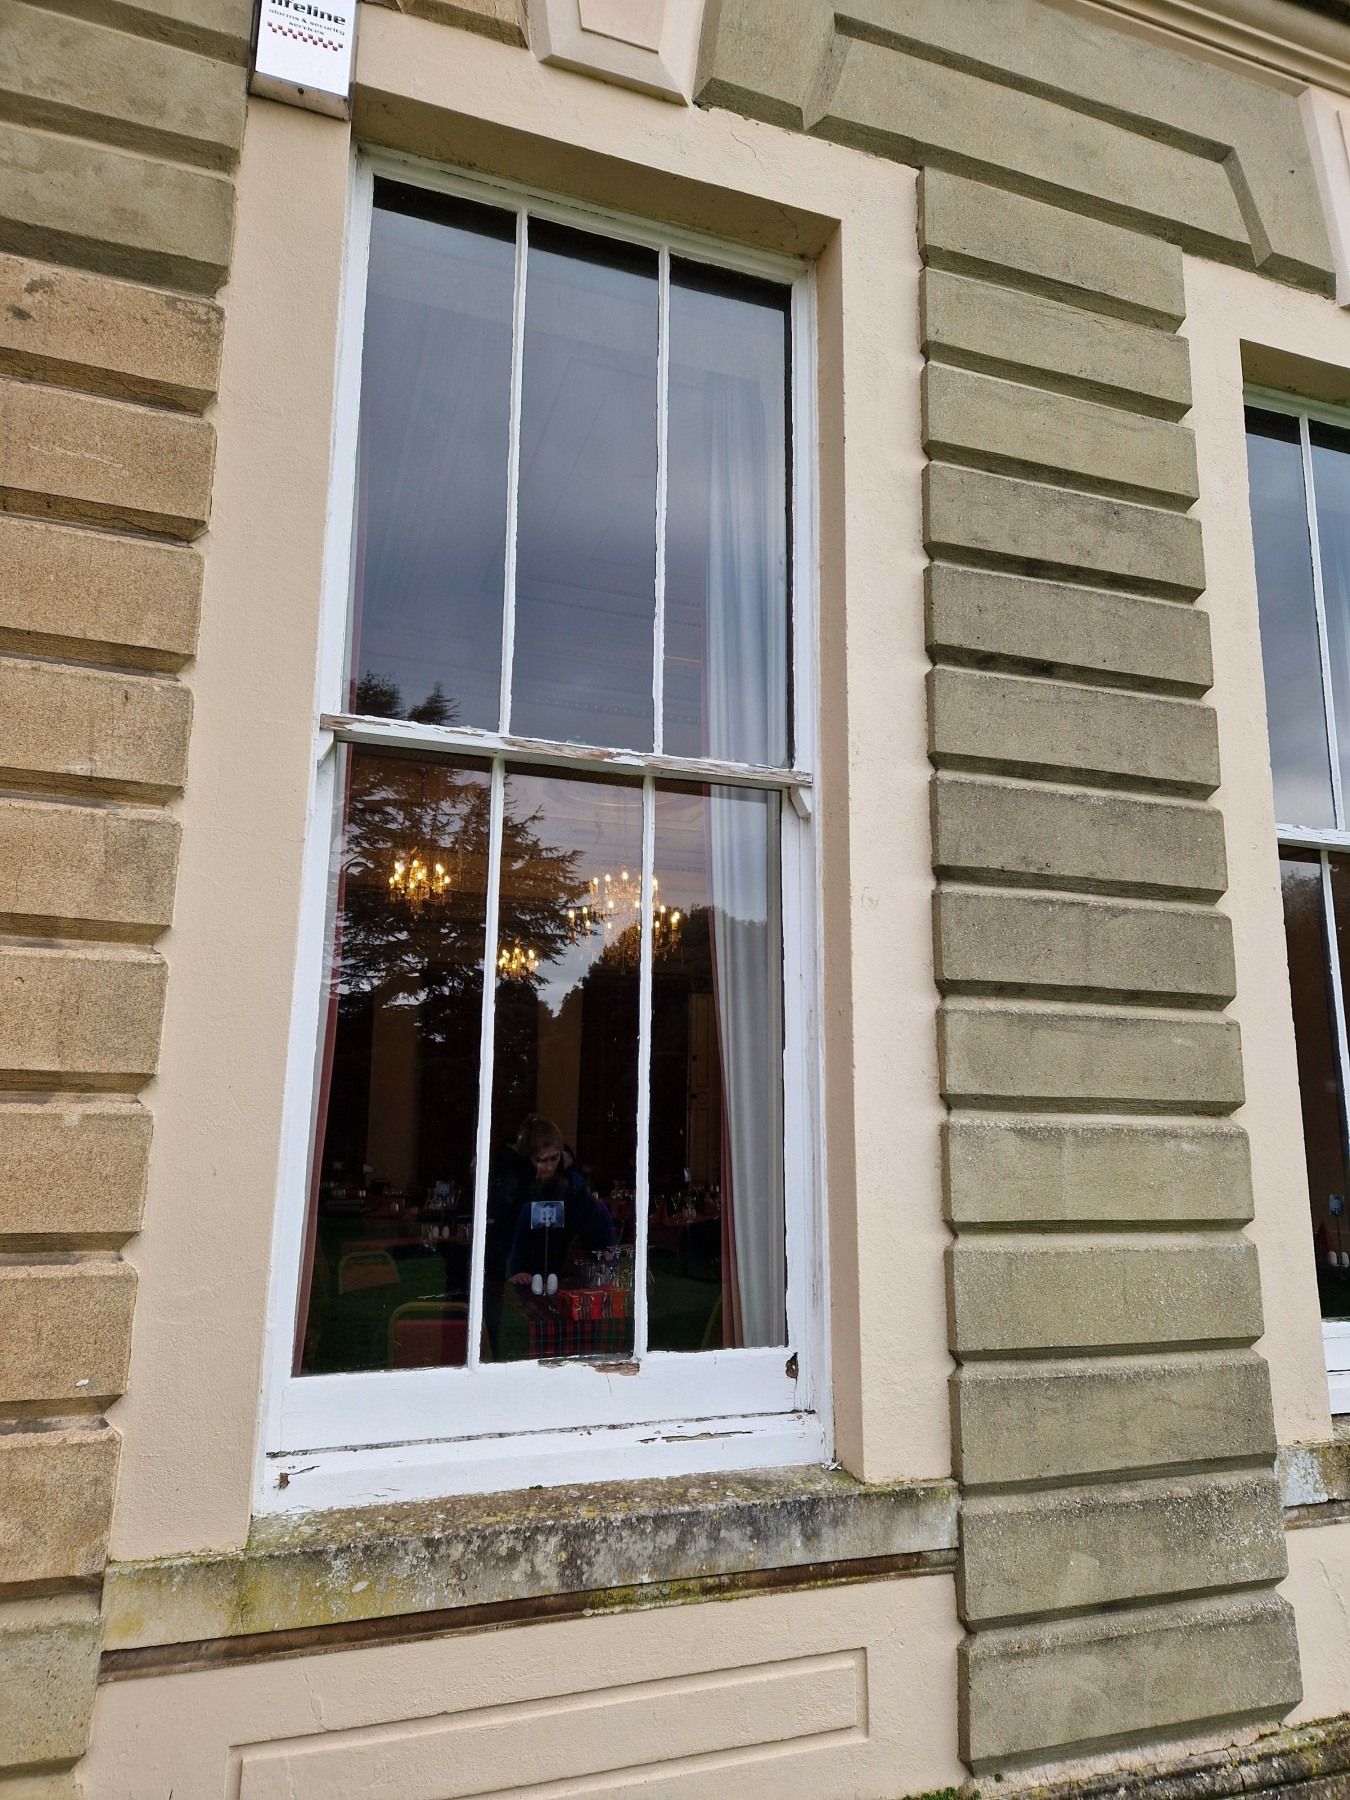 sash window in poor condition